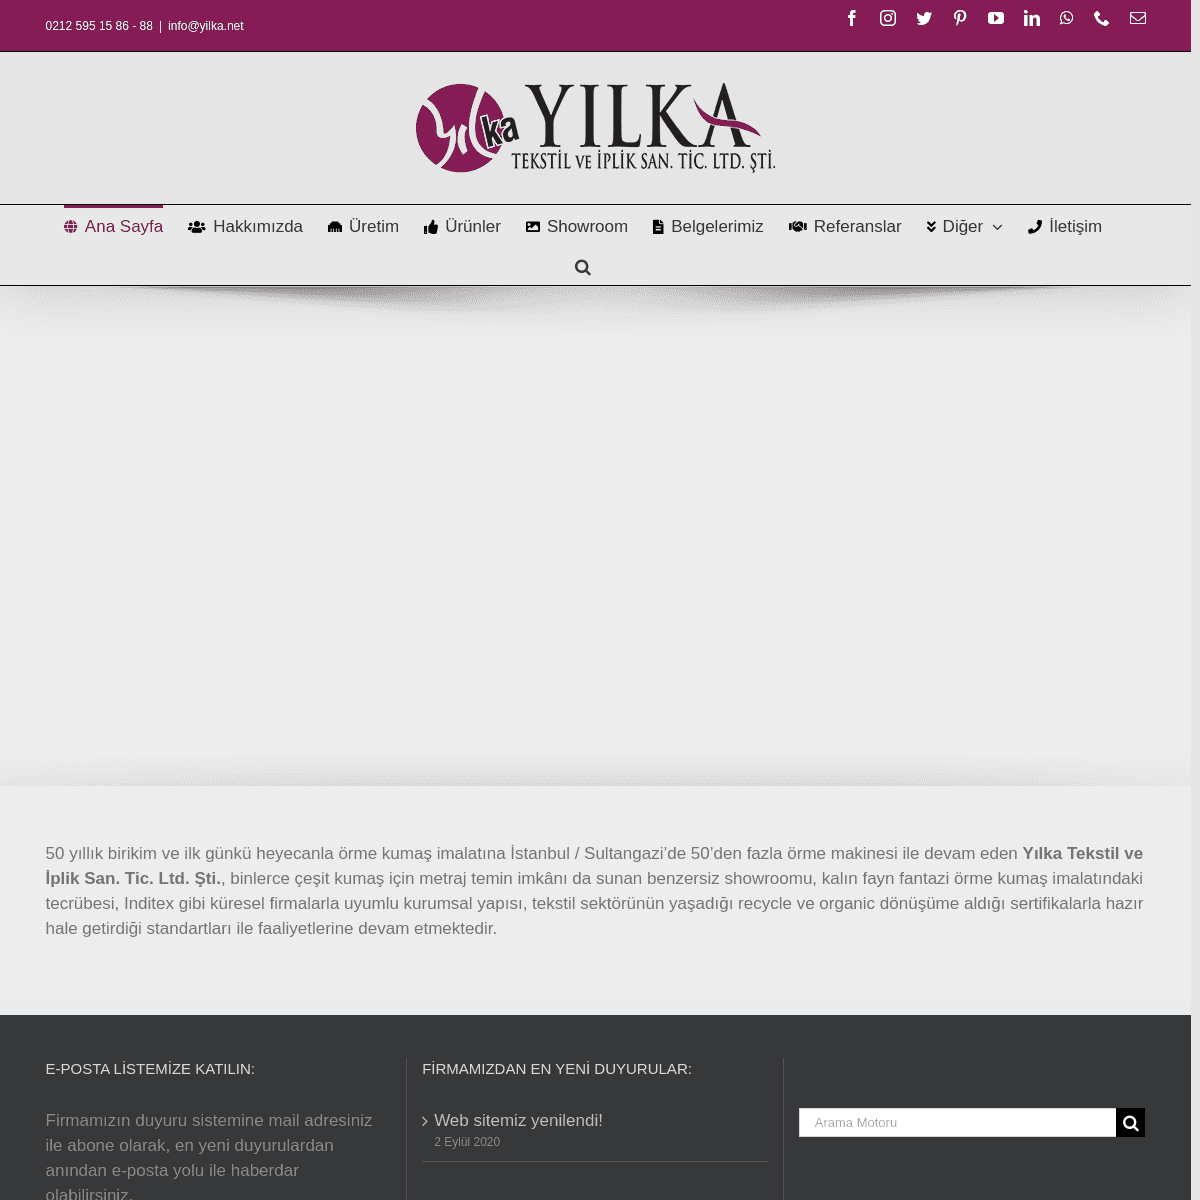 A complete backup of yilka.net